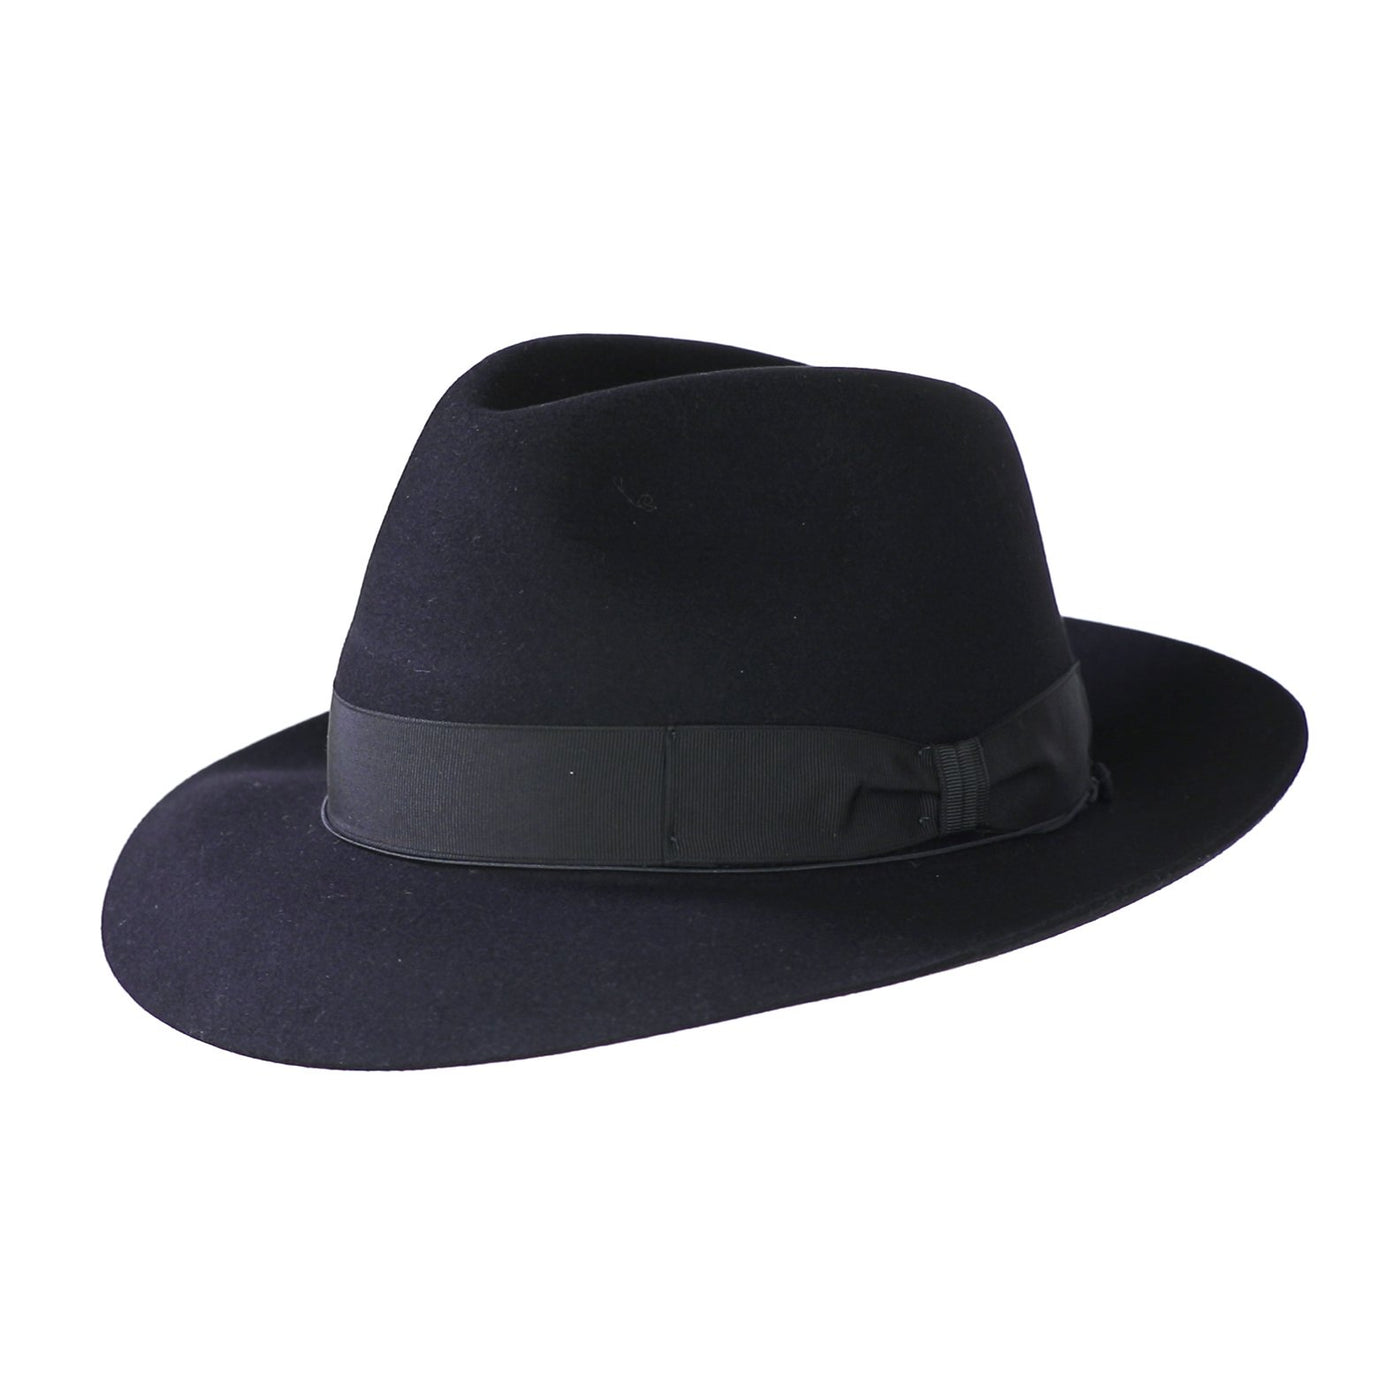 Bellagio 238 - Black, product_type] - Borsalino for Atica fedora hat